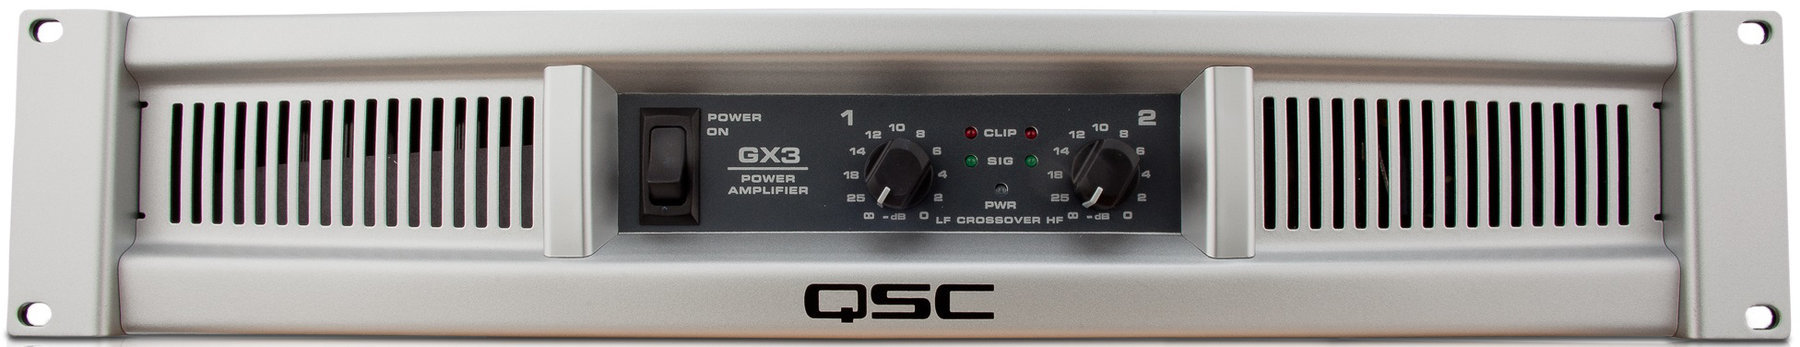 Power amplifier QSC GX3 Power amplifier